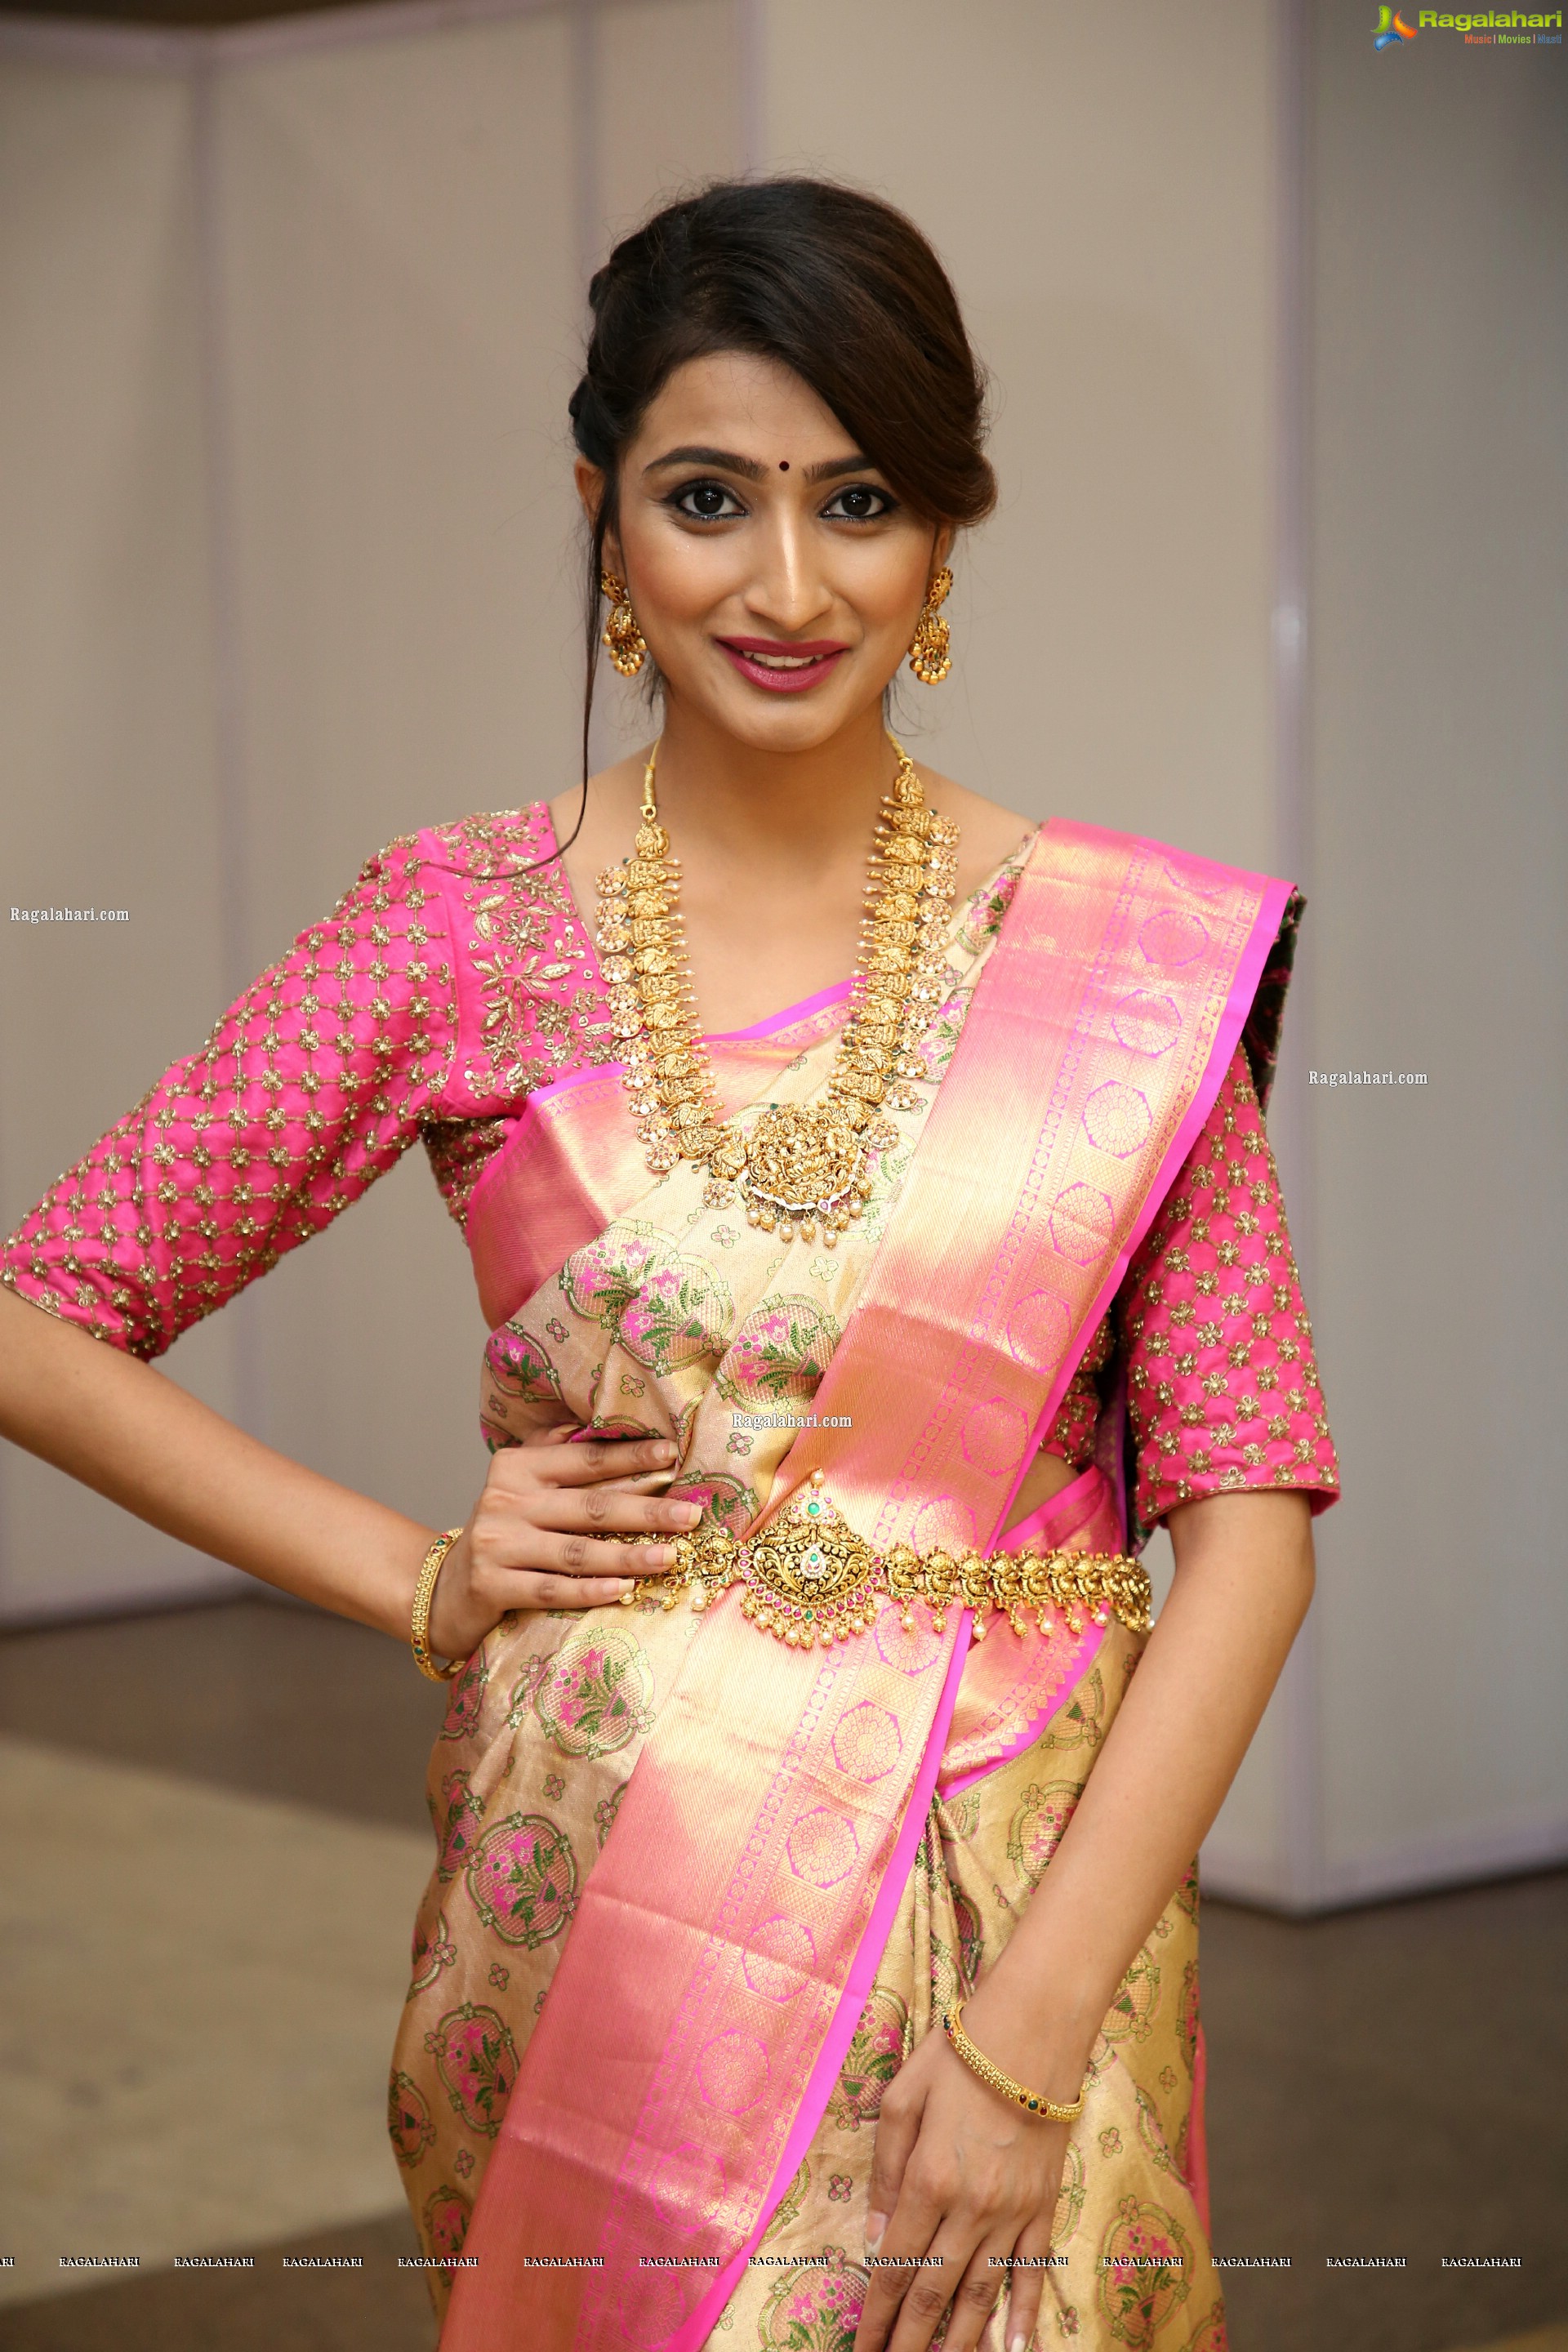 Fasiha Waseem Poses With Gold Jewellery, HD Photo Gallery